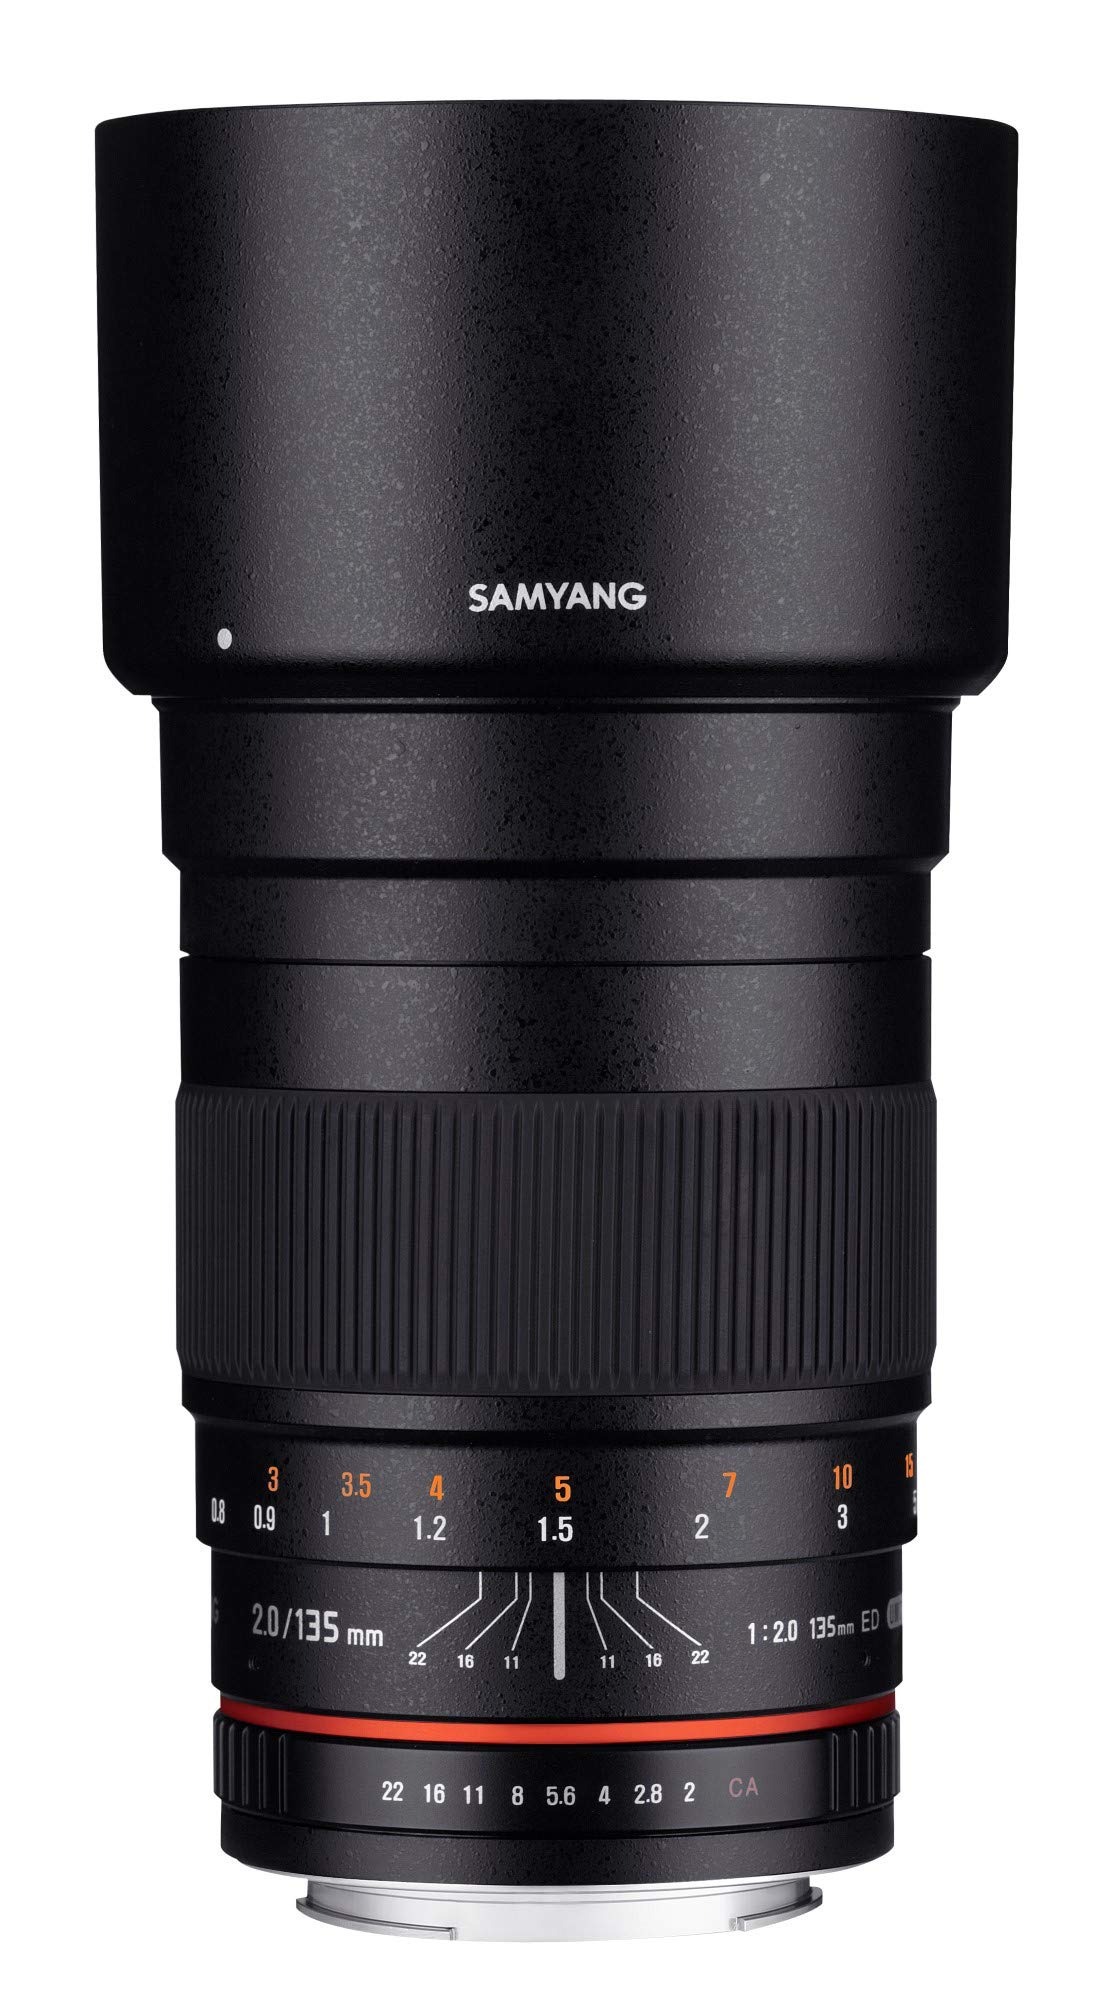 Samyang 135mm F2.0 für MFT - APS-C Teleobjektiv Festbrennweite für MFT Kameras, manueller Fokus, für Olympus OM-D E-M10 Mark IV, E-M1 Mark III, Panasonic Lumix BGH1, DC-G110, DC-G91